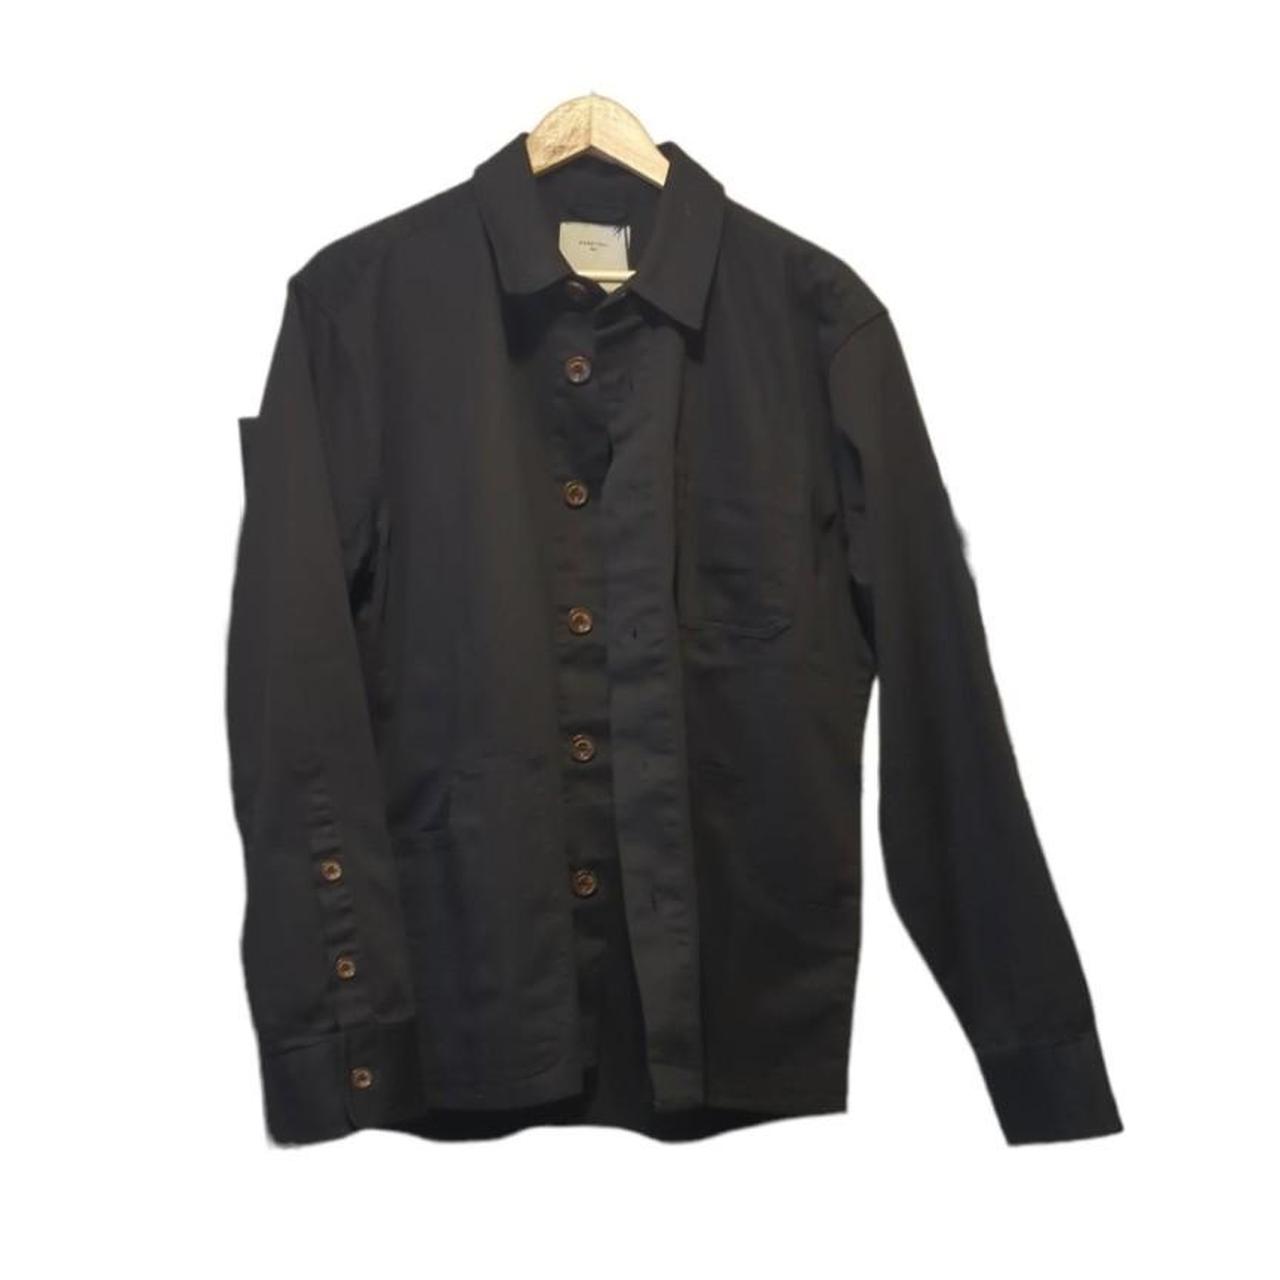 PERCIVAL black smart jacket SIZE AND... - Depop